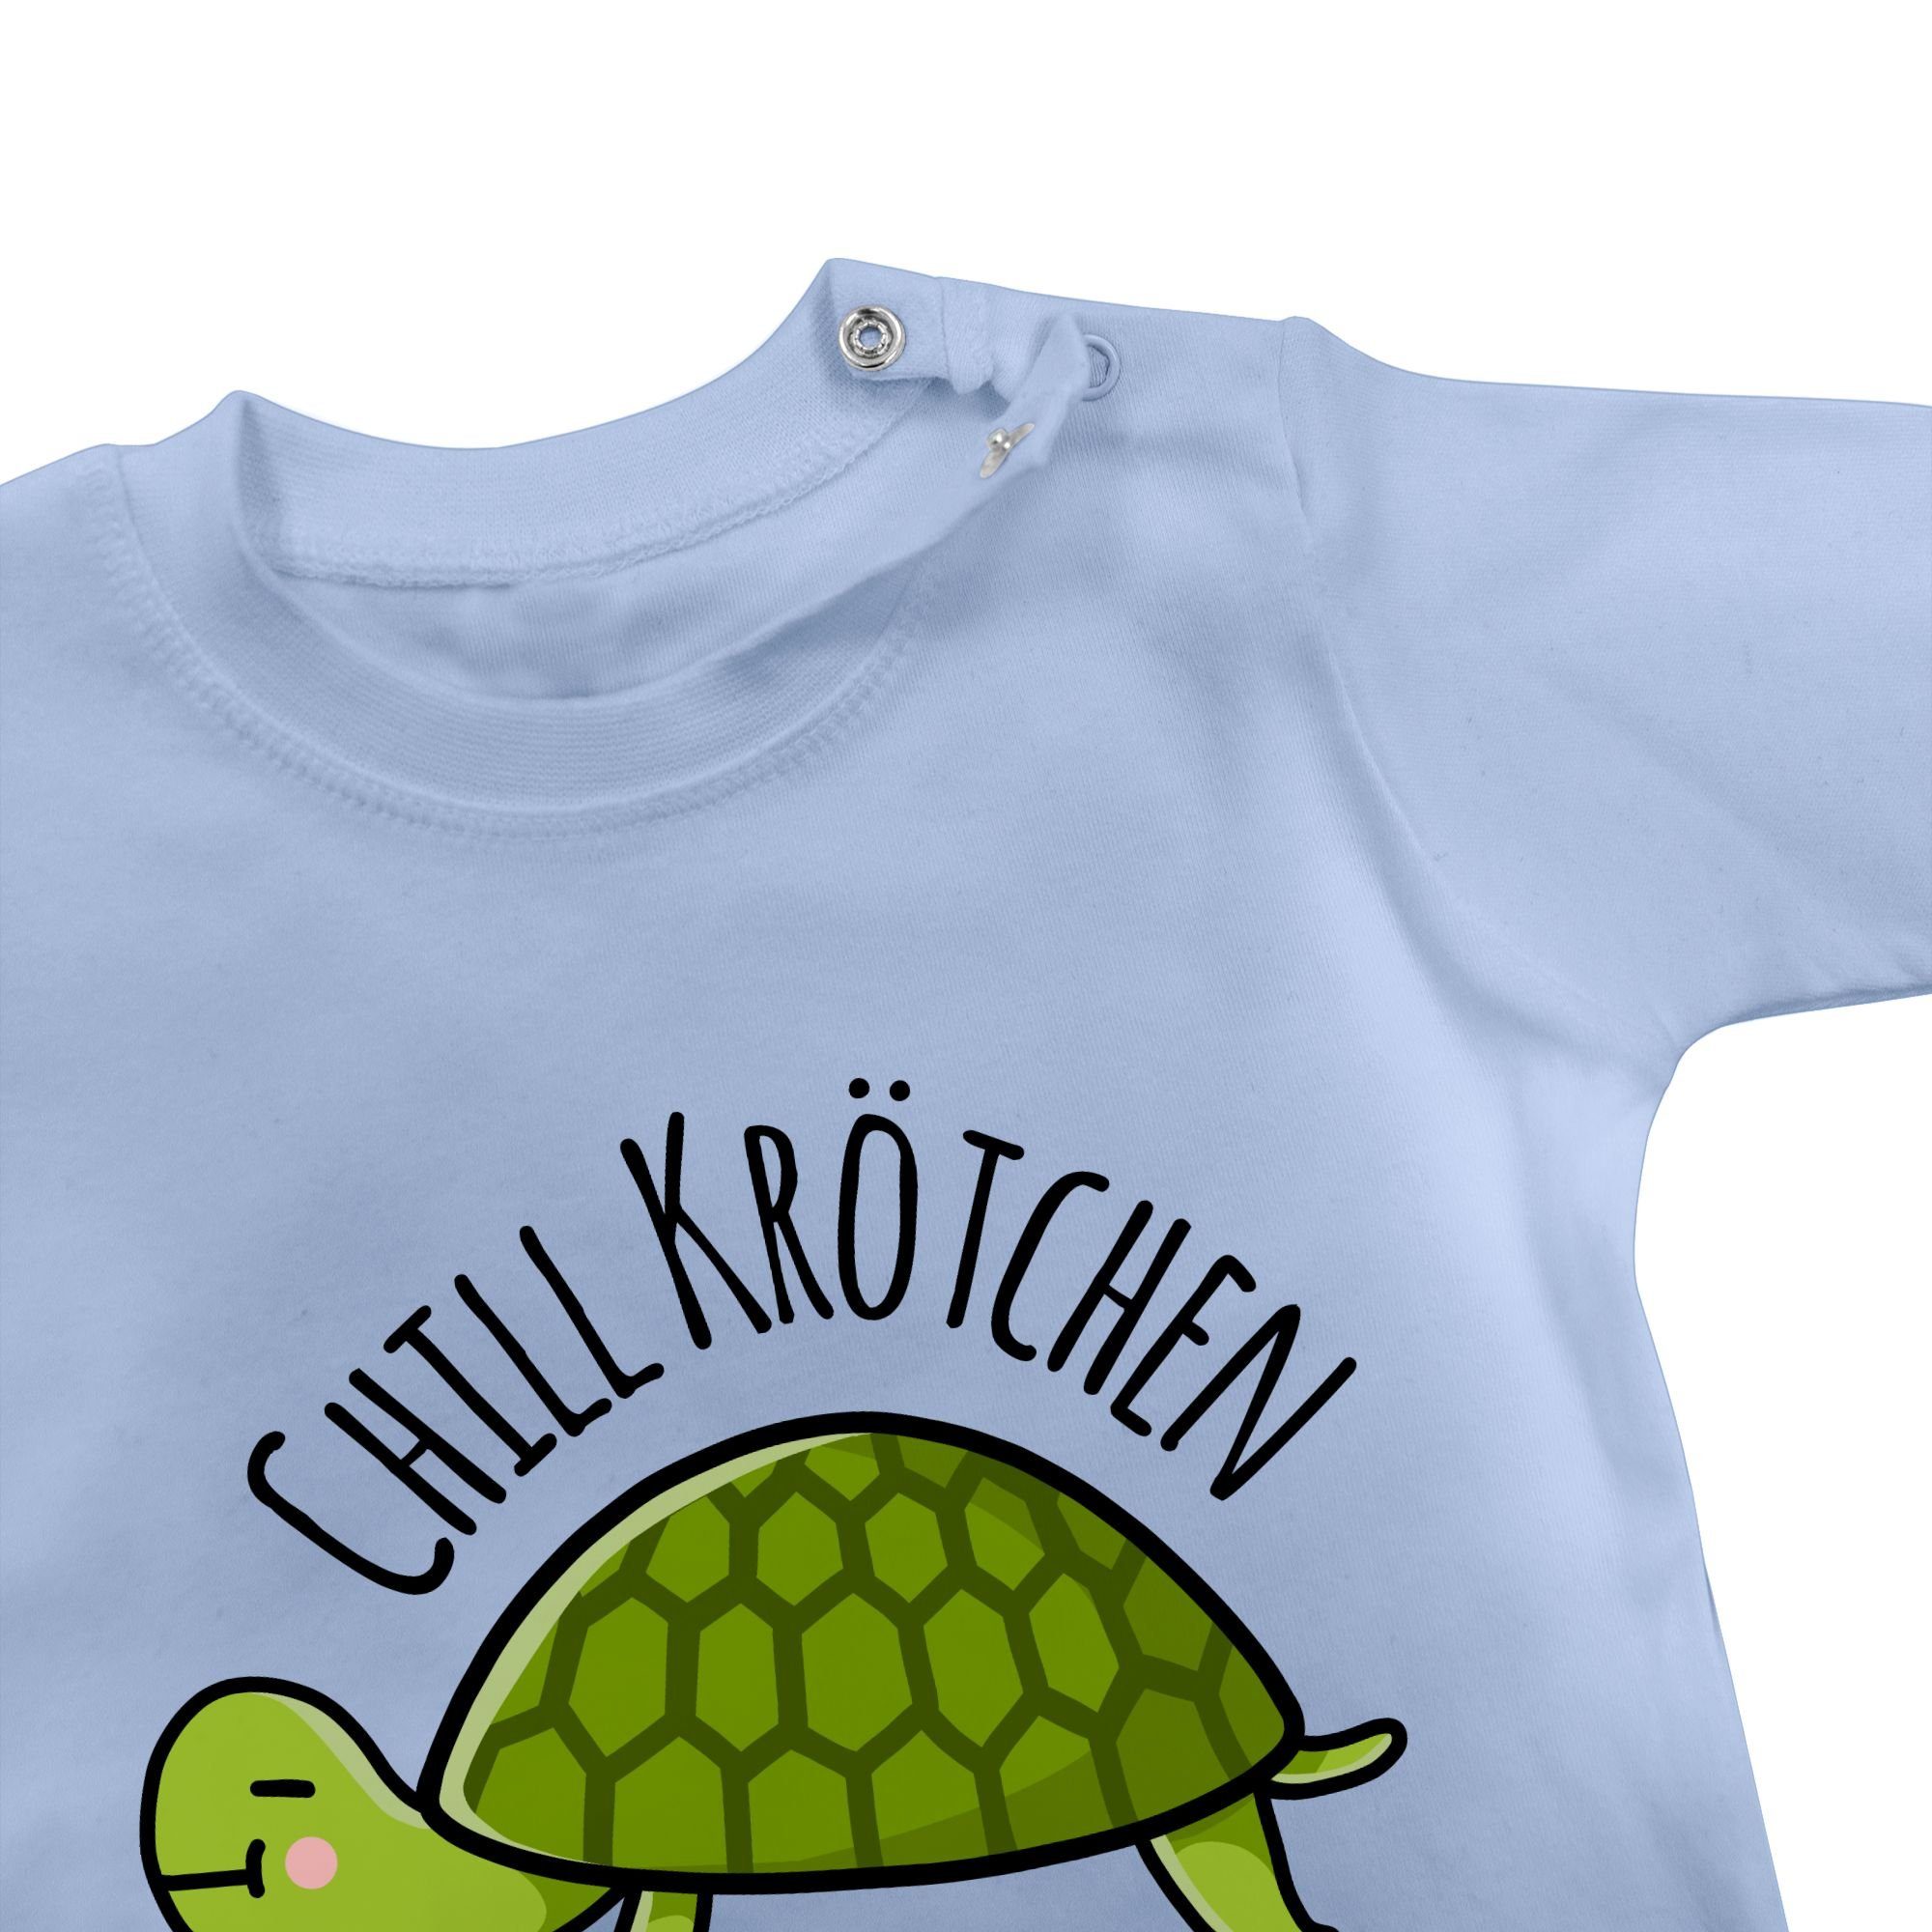 Tiermotiv Baby T-Shirt 1 Print Shirtracer Babyblau Chill Animal Schildkröte Krötchen